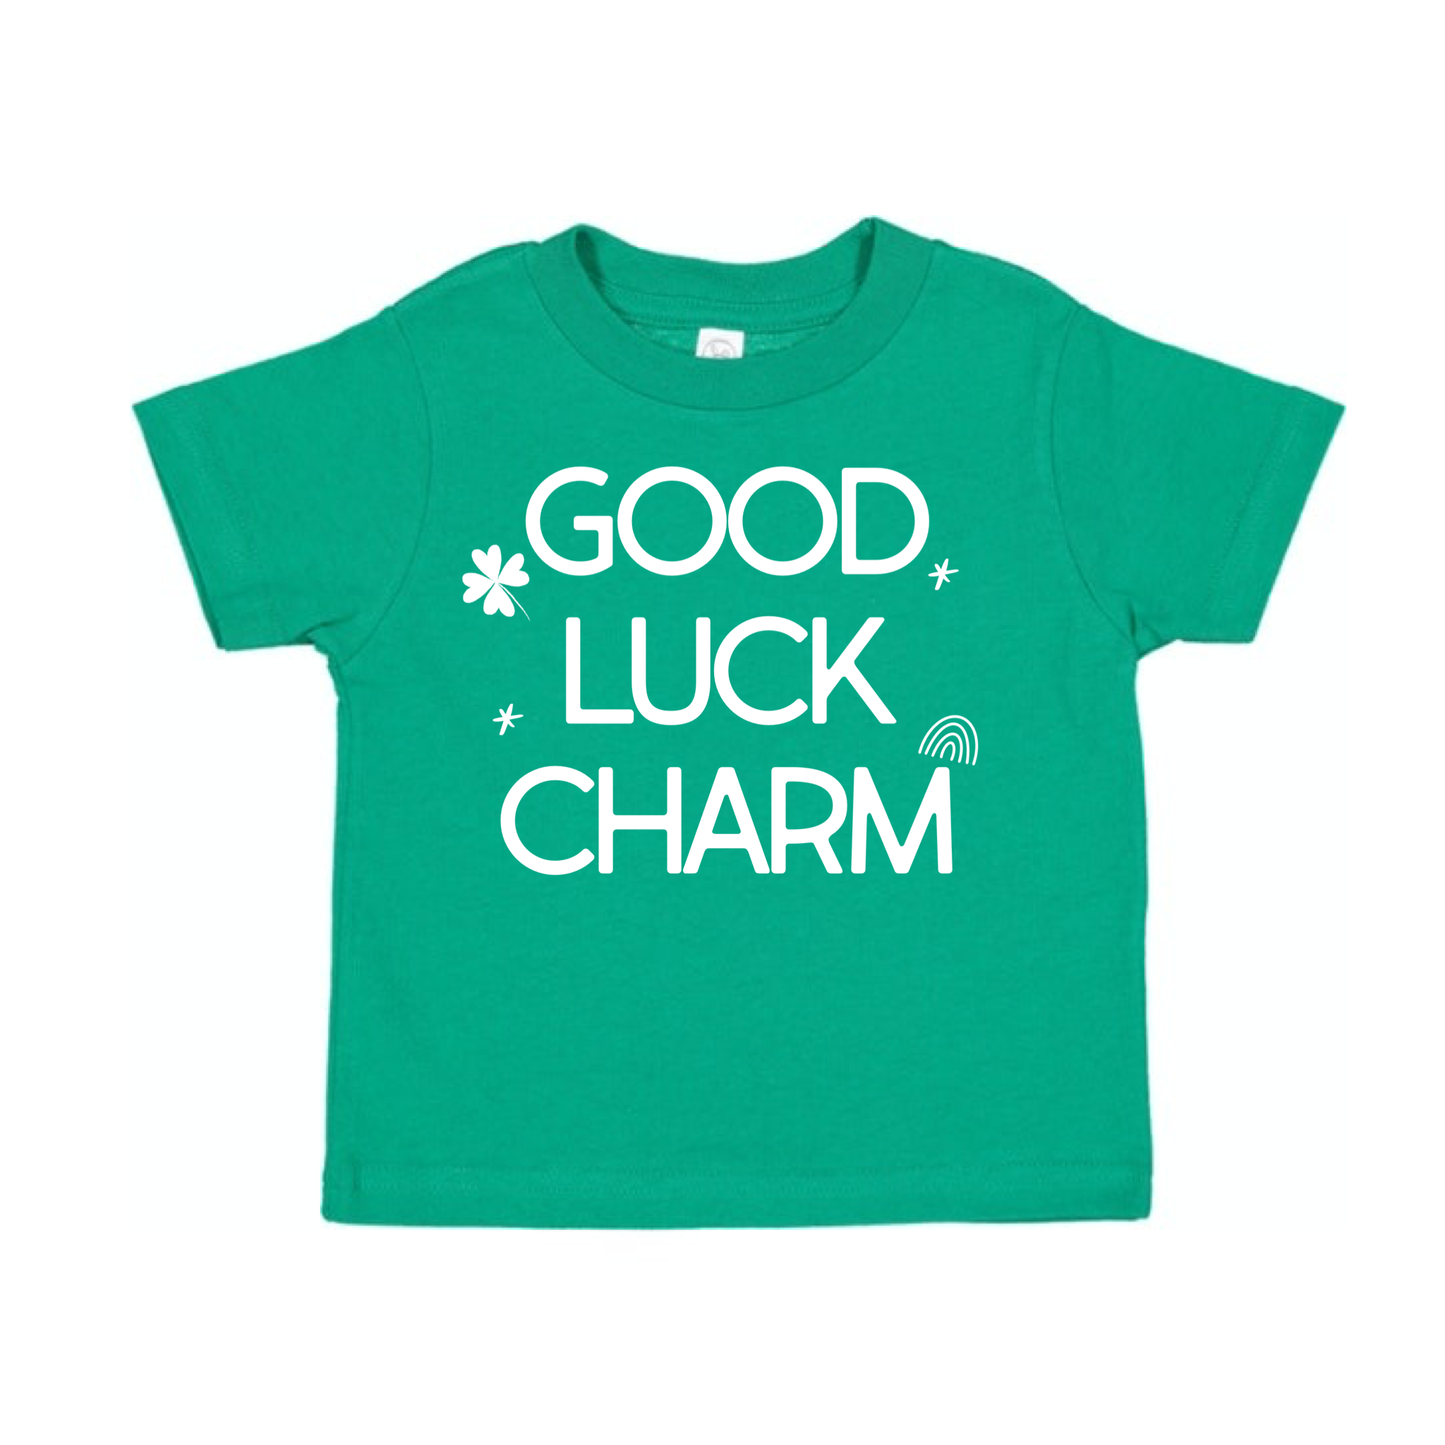 Good luck charm green